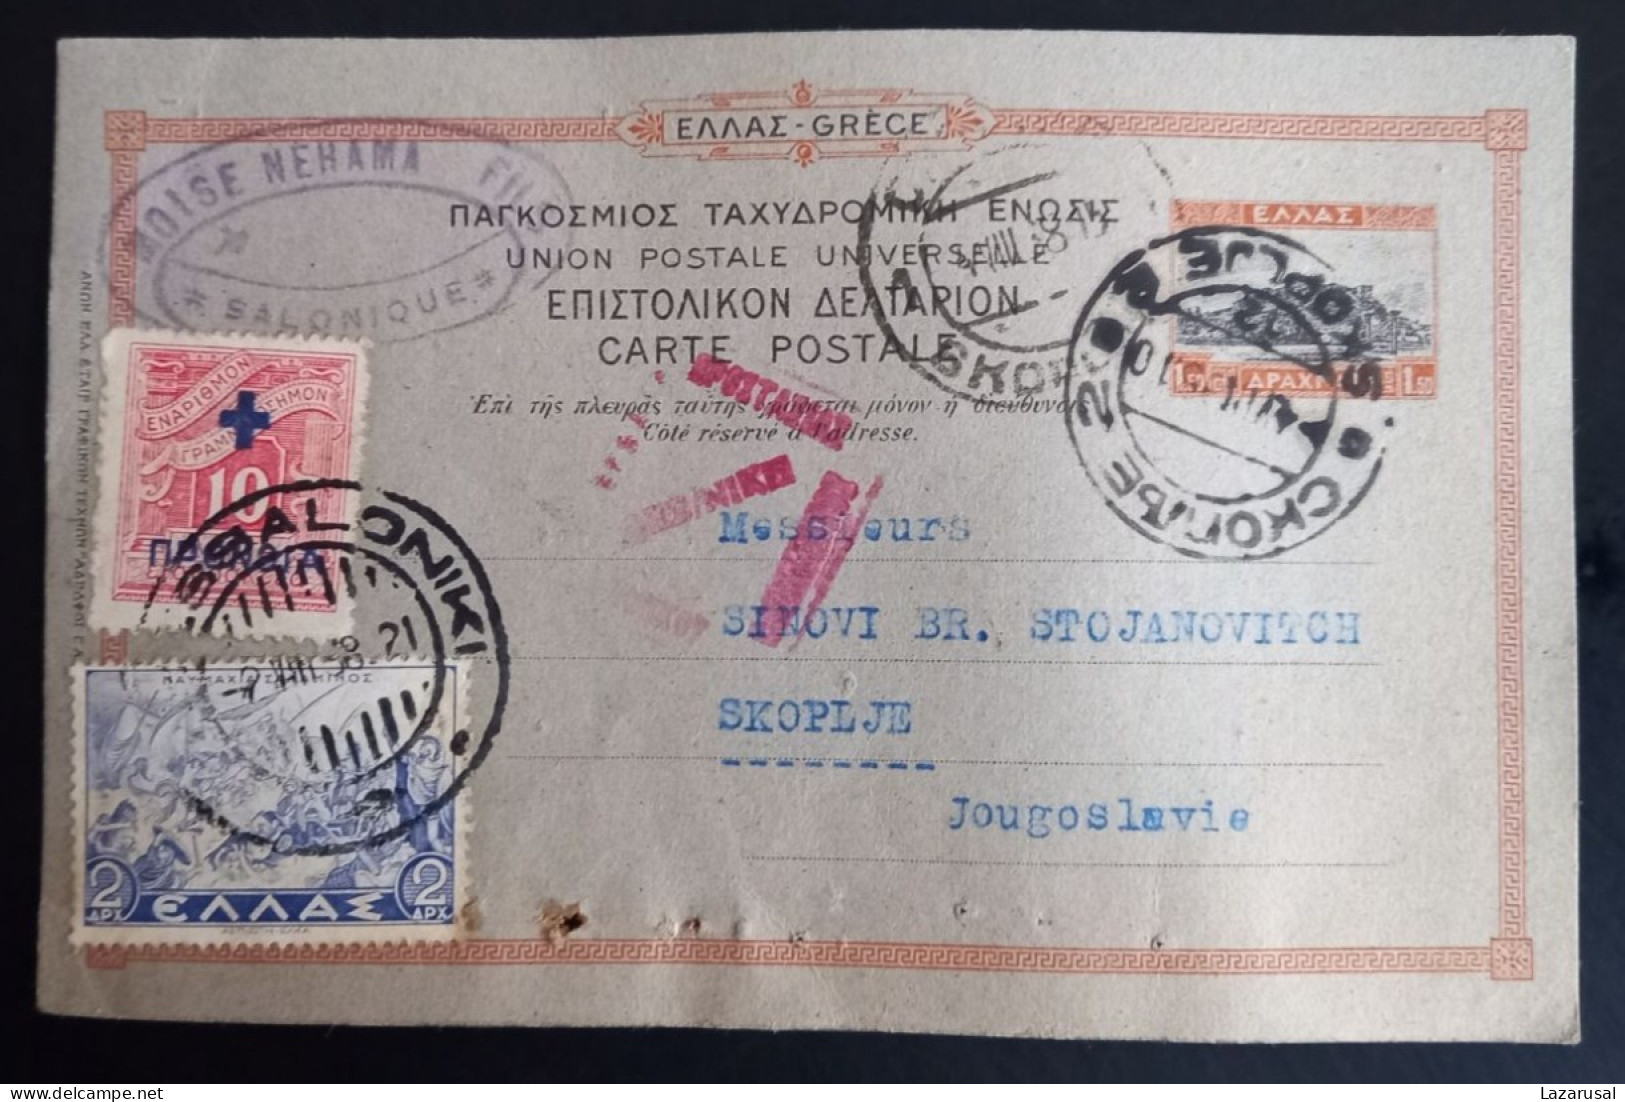 Lot #1 Thessaloniki -1938 Stationery Pc. Greece - Jewish Judaica MOISE NEHAMA FILS - TRANSPORTS INTERNATIONAUX - Postal Stationery